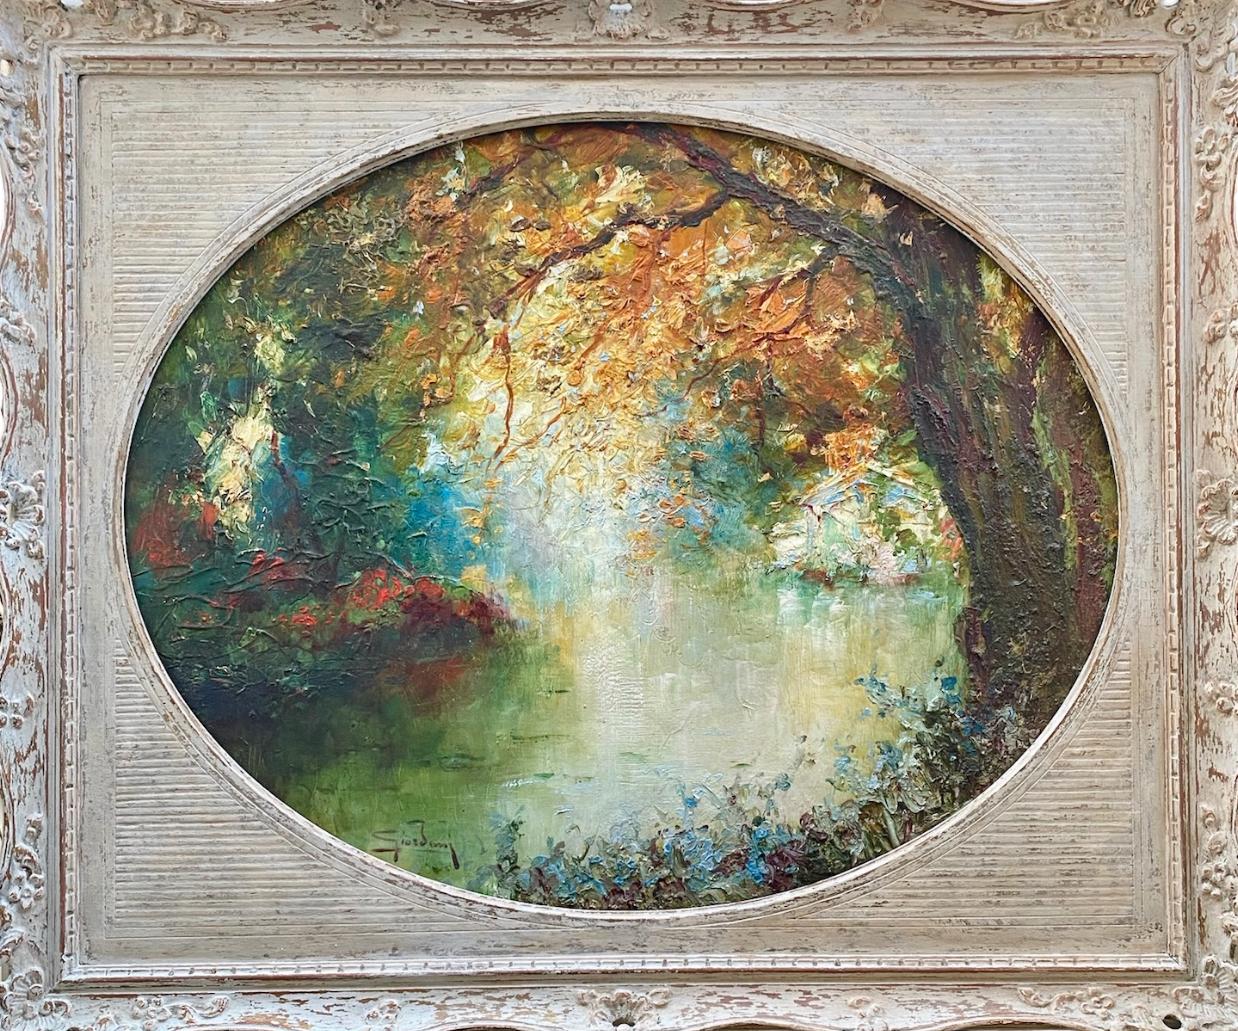 Italo Giordani Landscape Painting - Light on the water large colorful Impressionist landscape with Monet-like irises